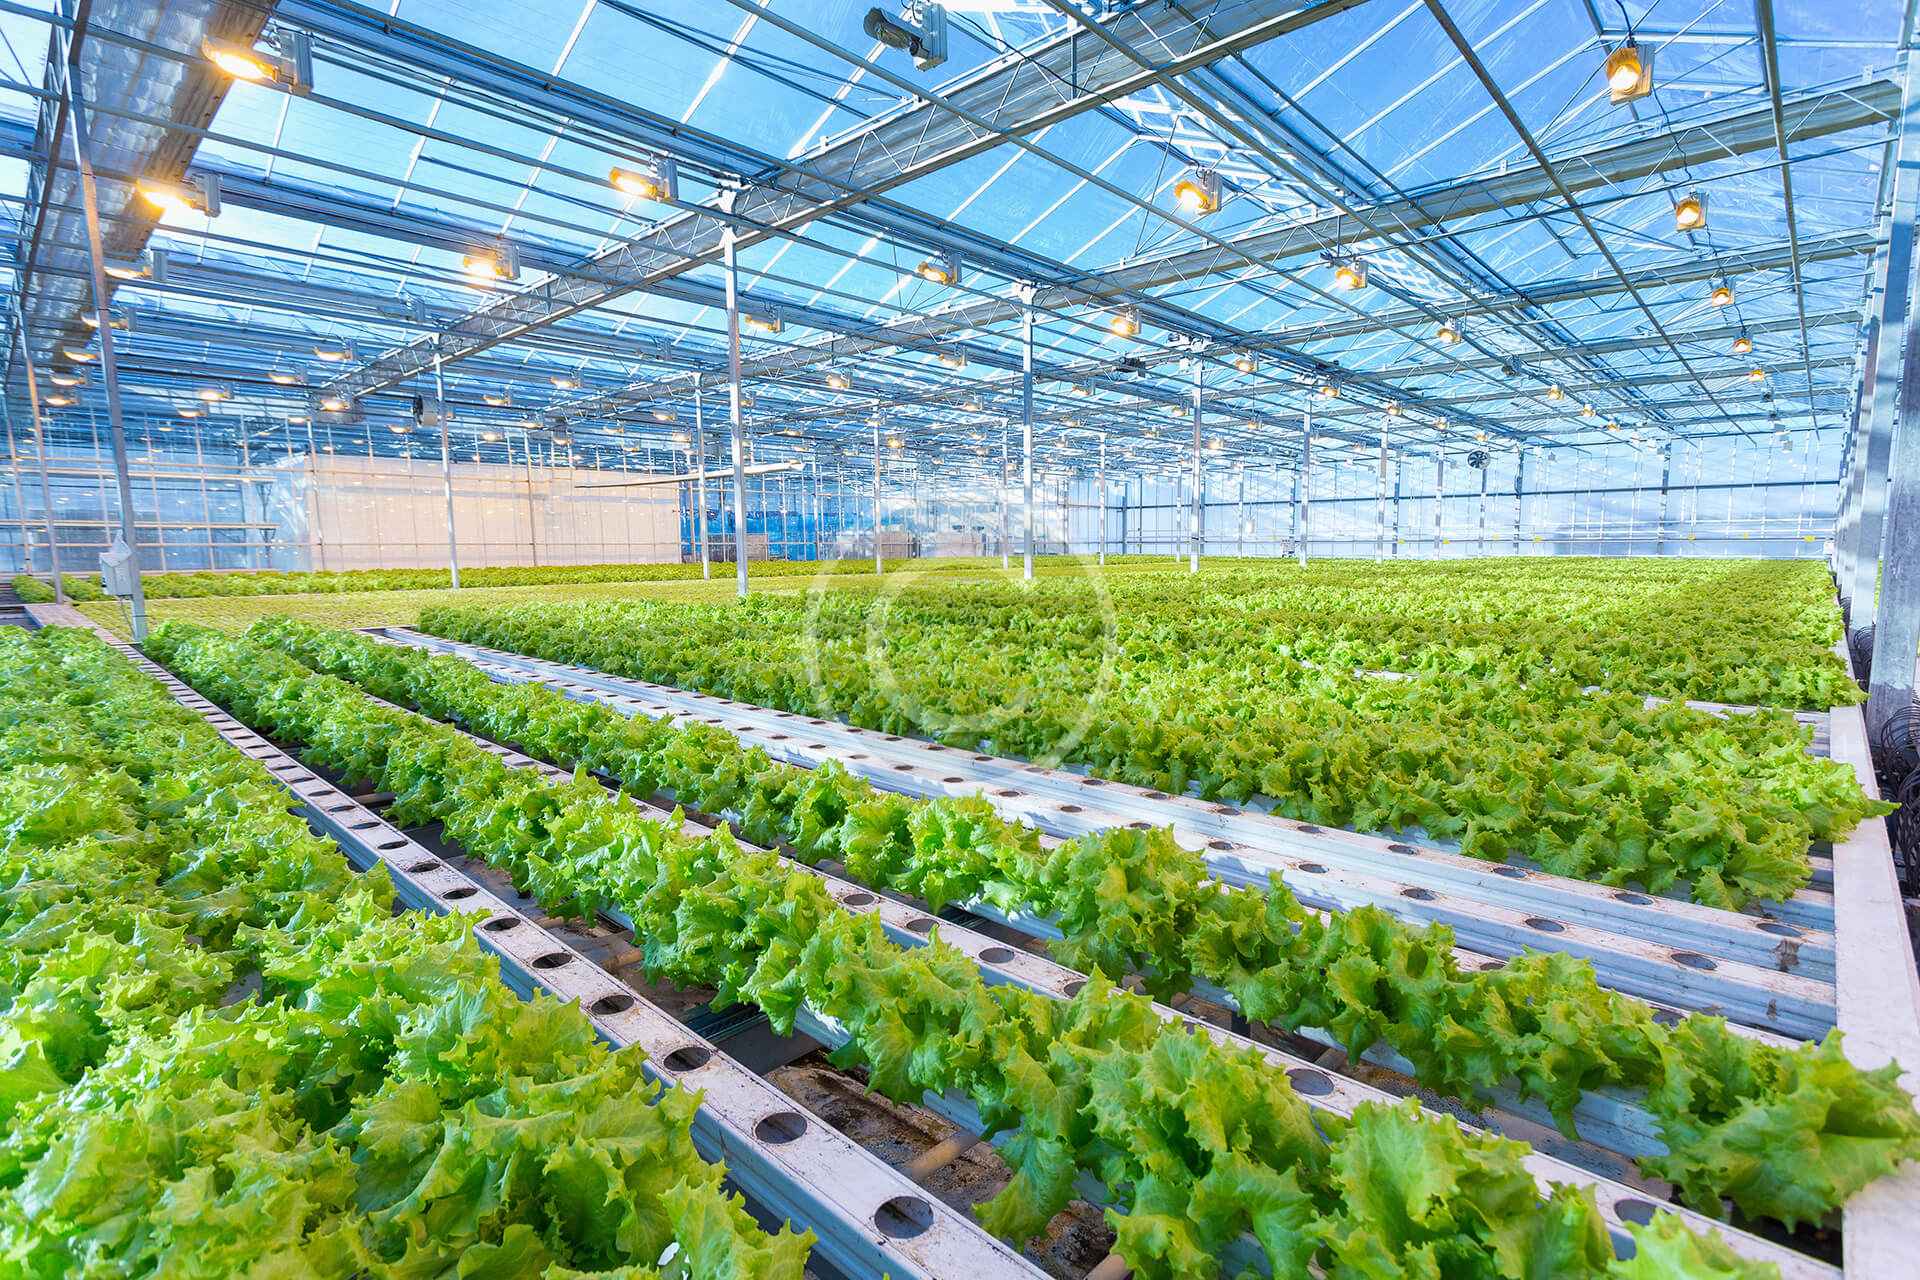 Lettuce farming